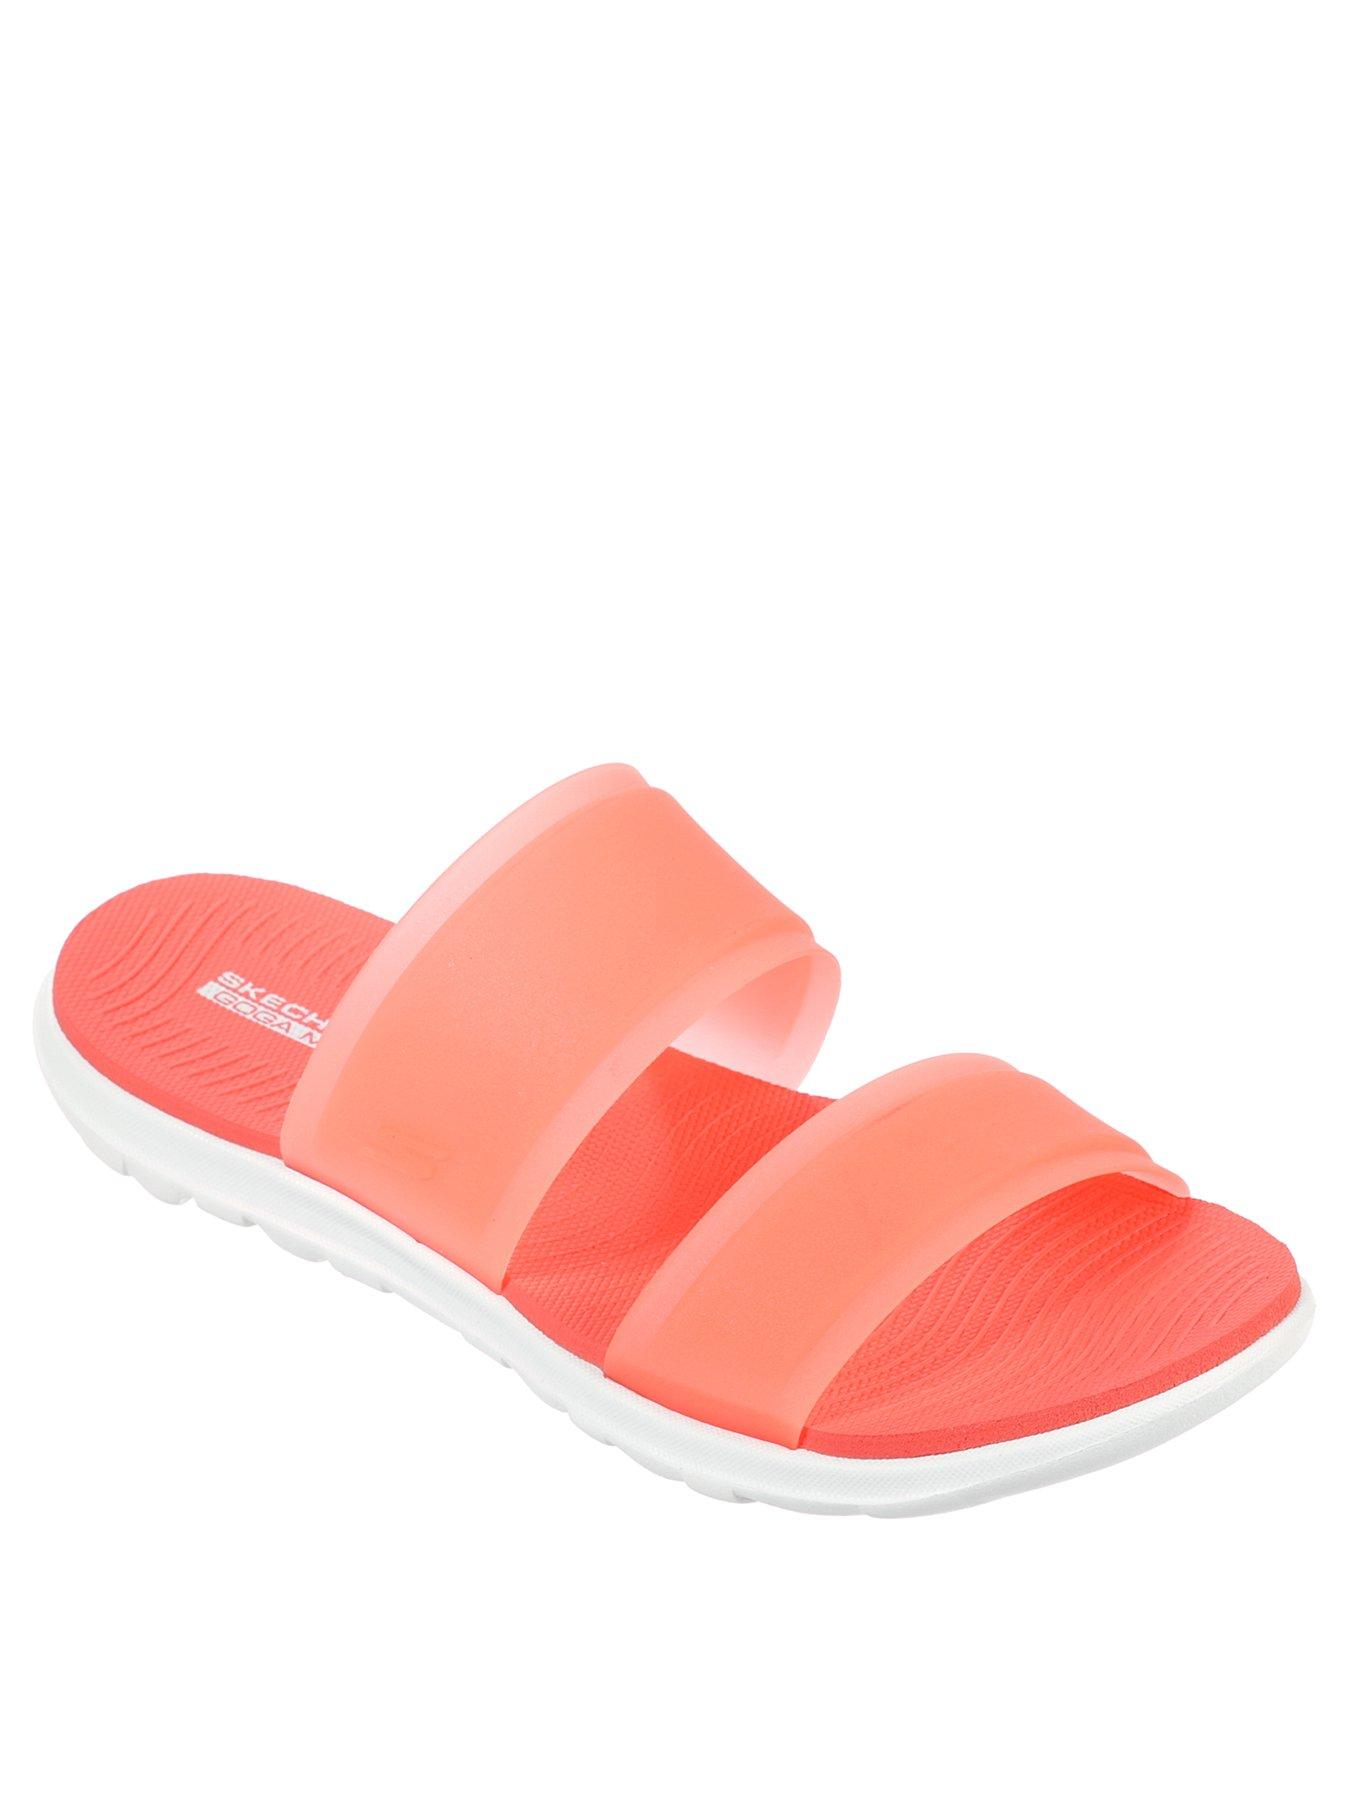 skechers ladies summer sandals